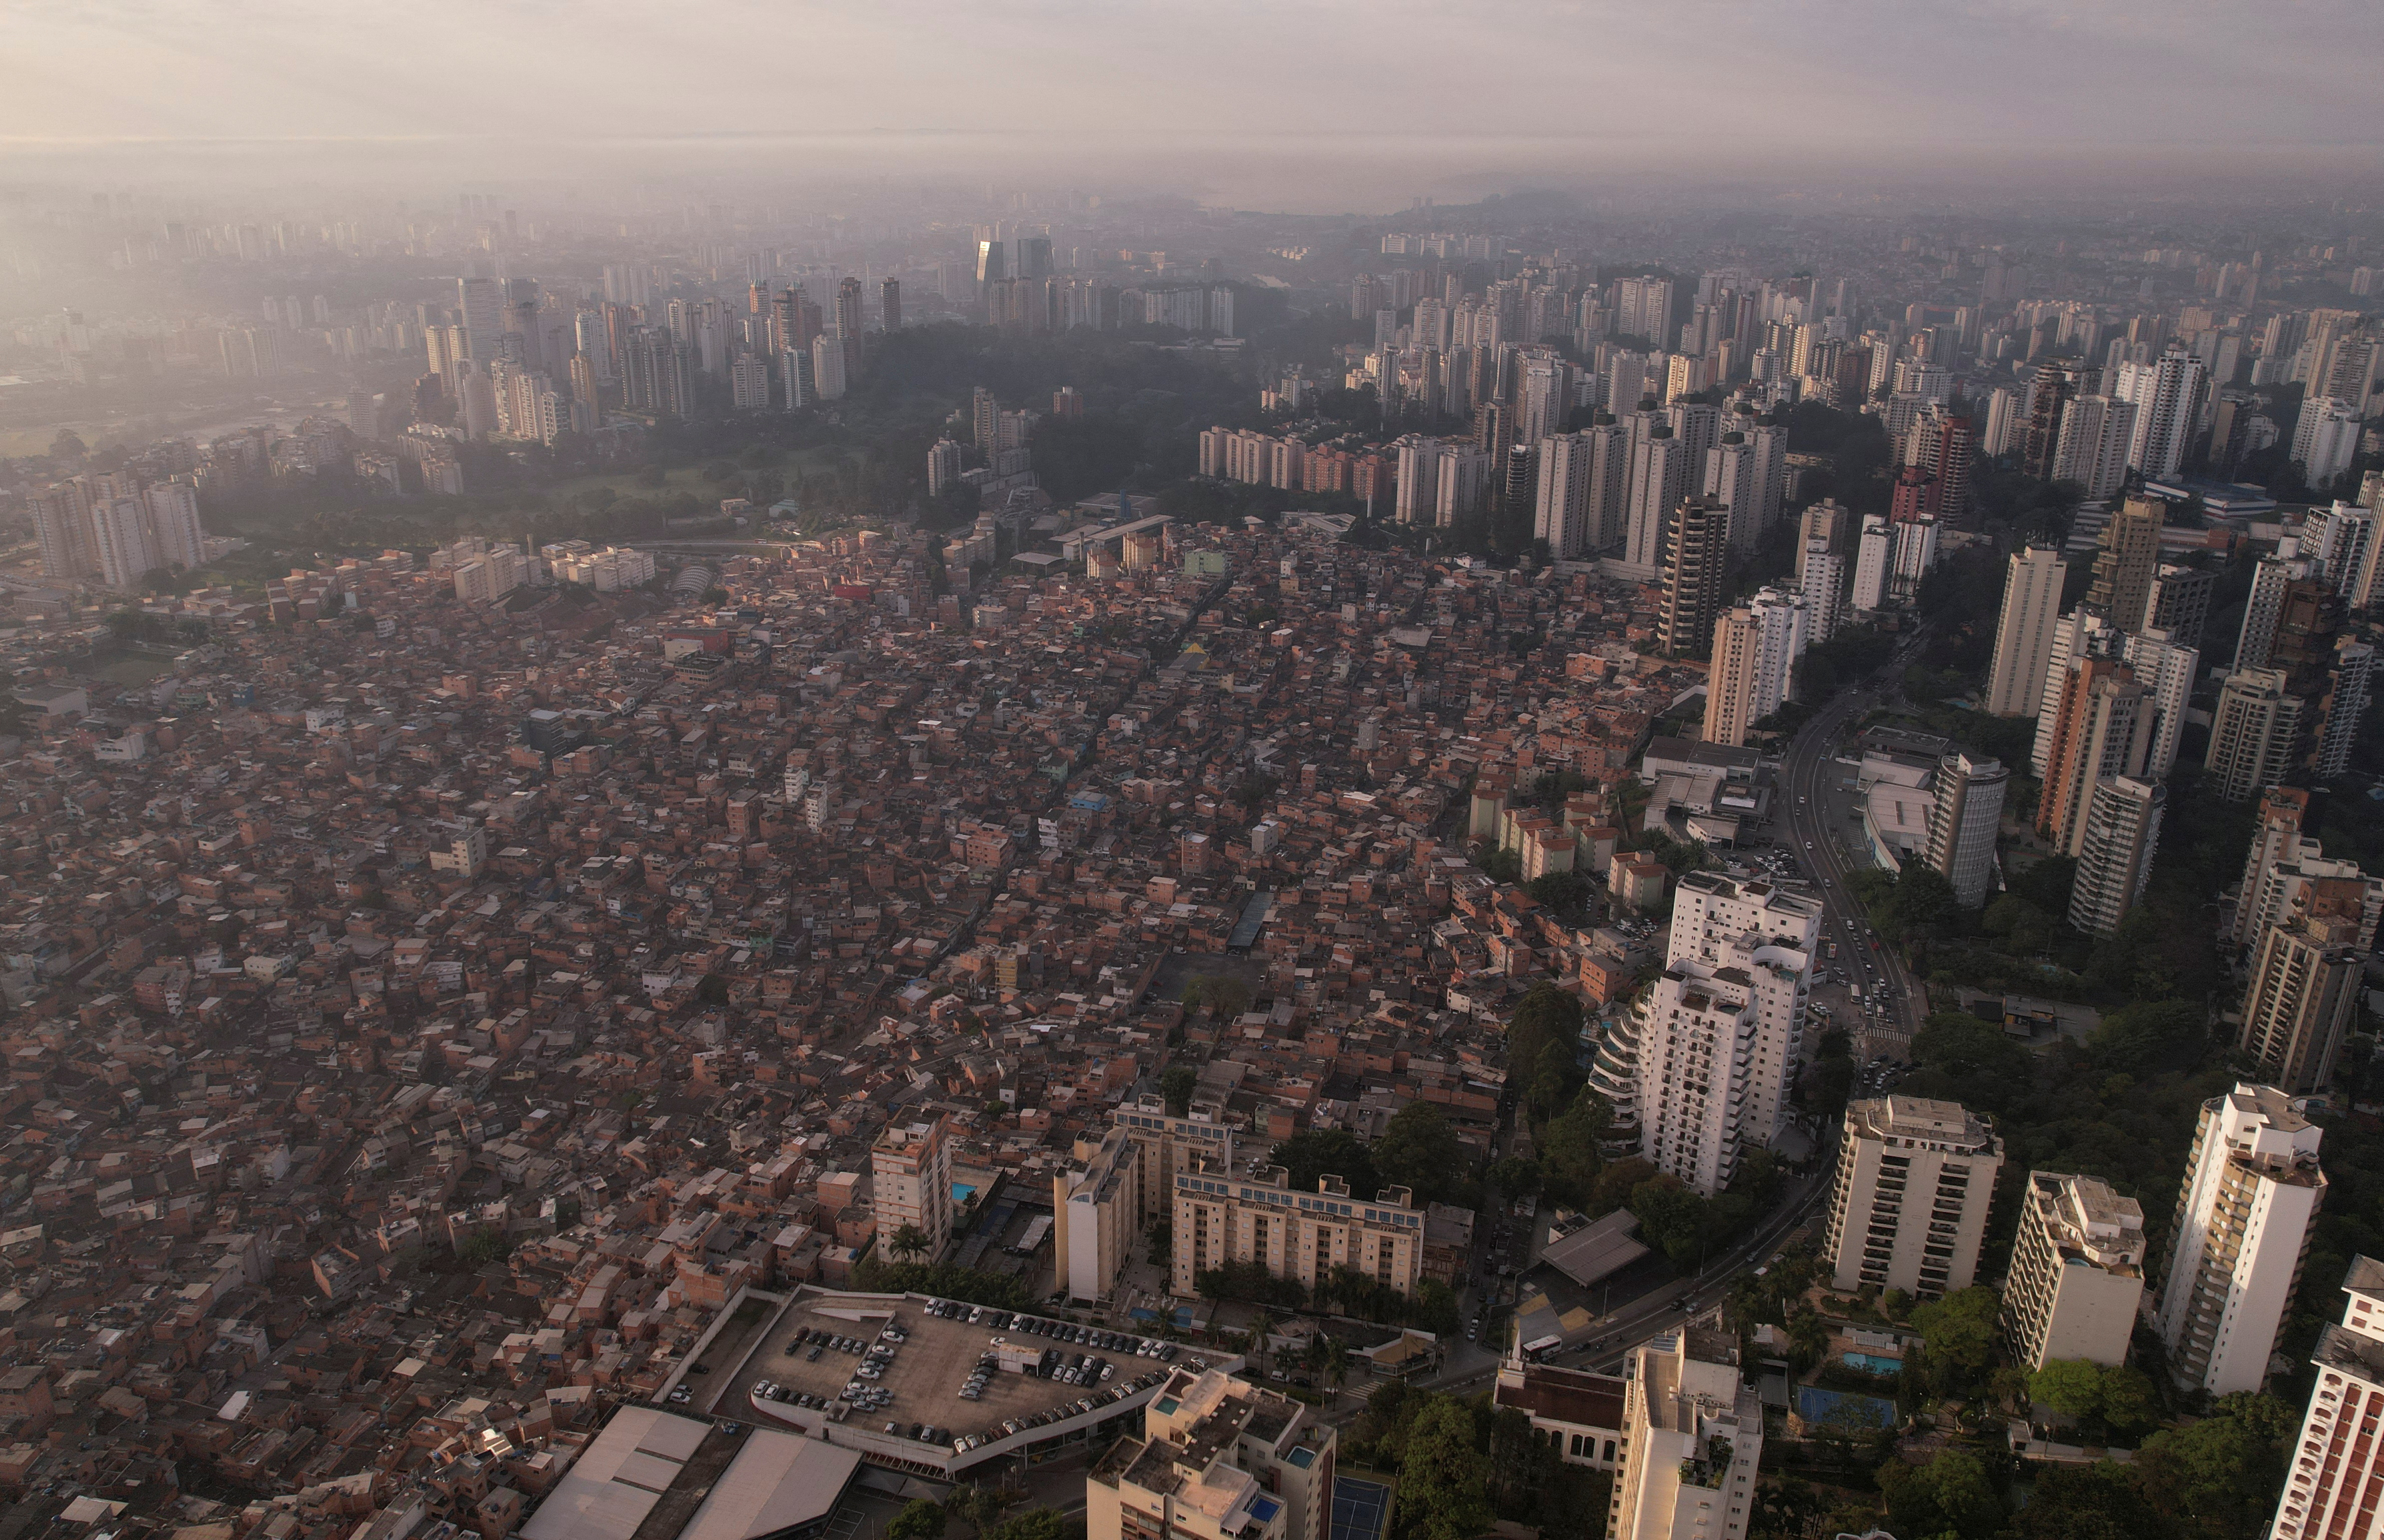 An aerial view shows Paraisopolis slum and buildings from Morumbi neighbourhood in Sao Paulo